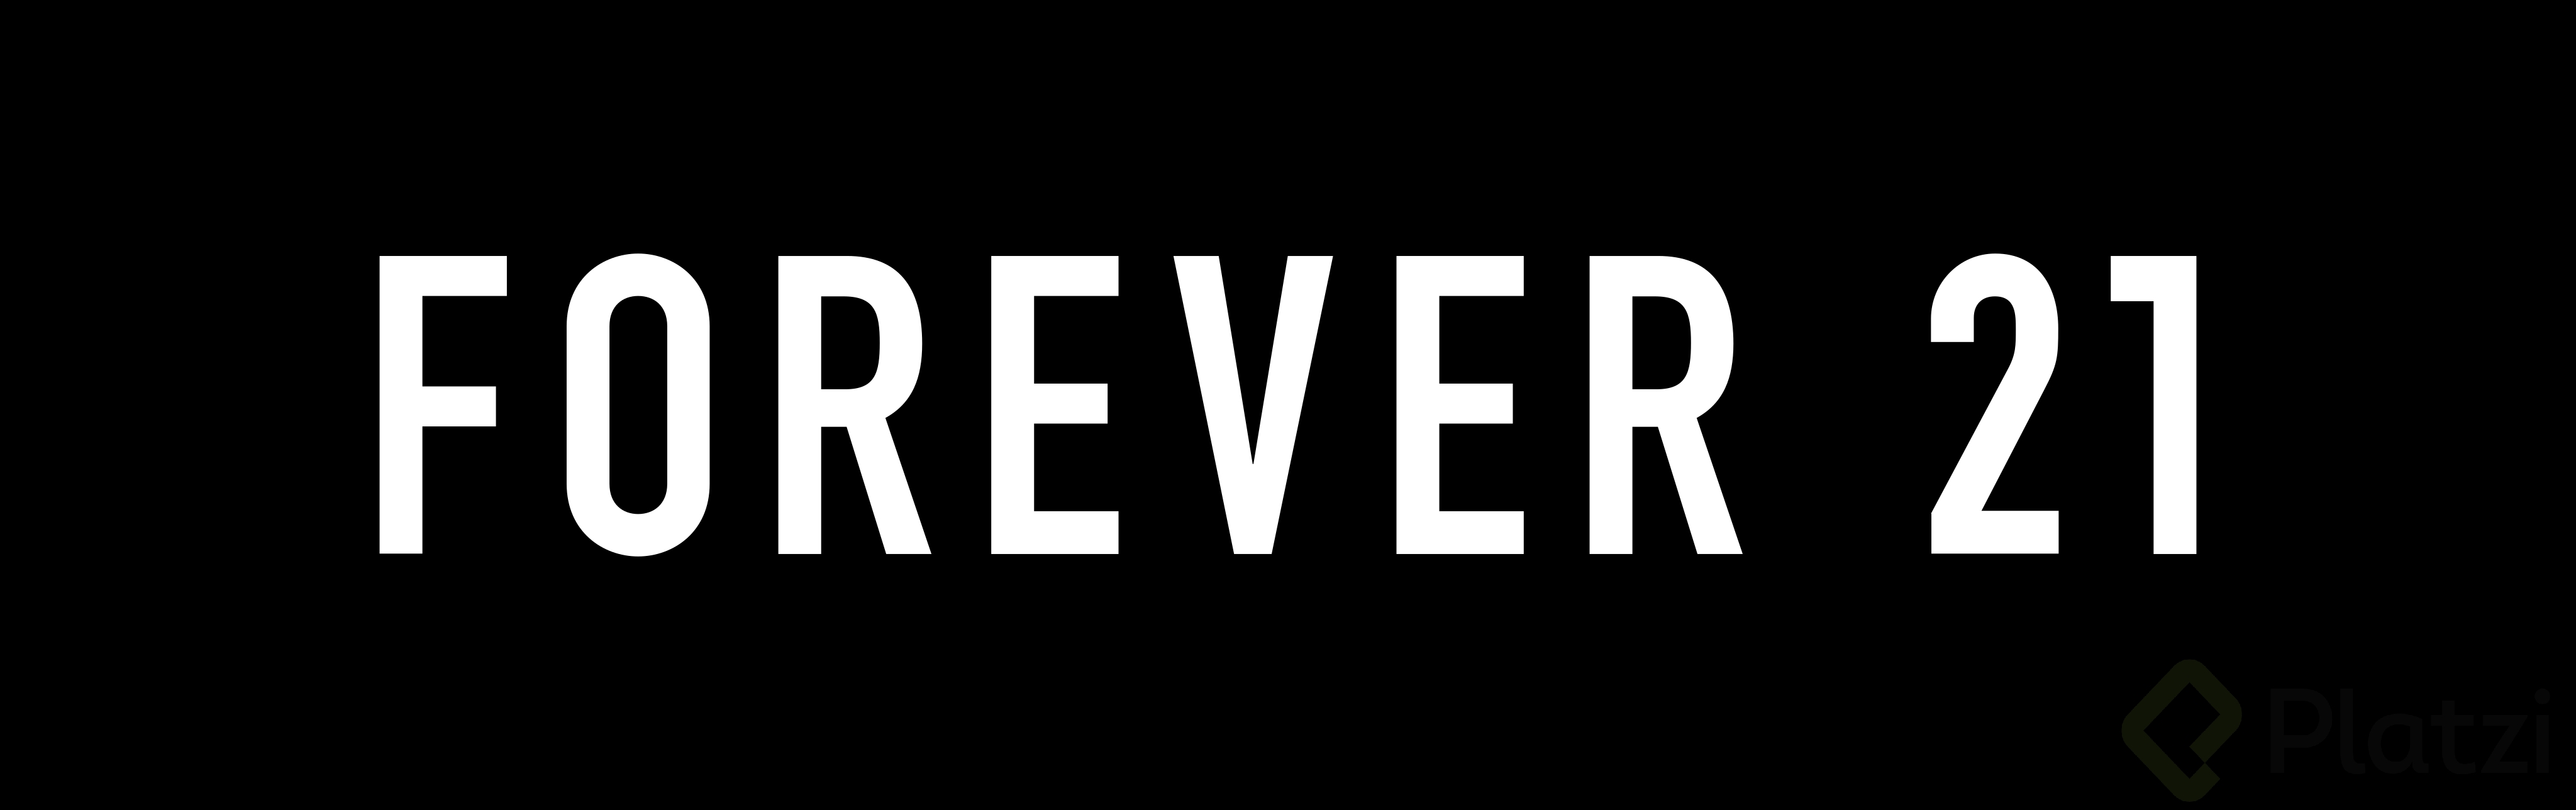 forever-21-logo-1.png